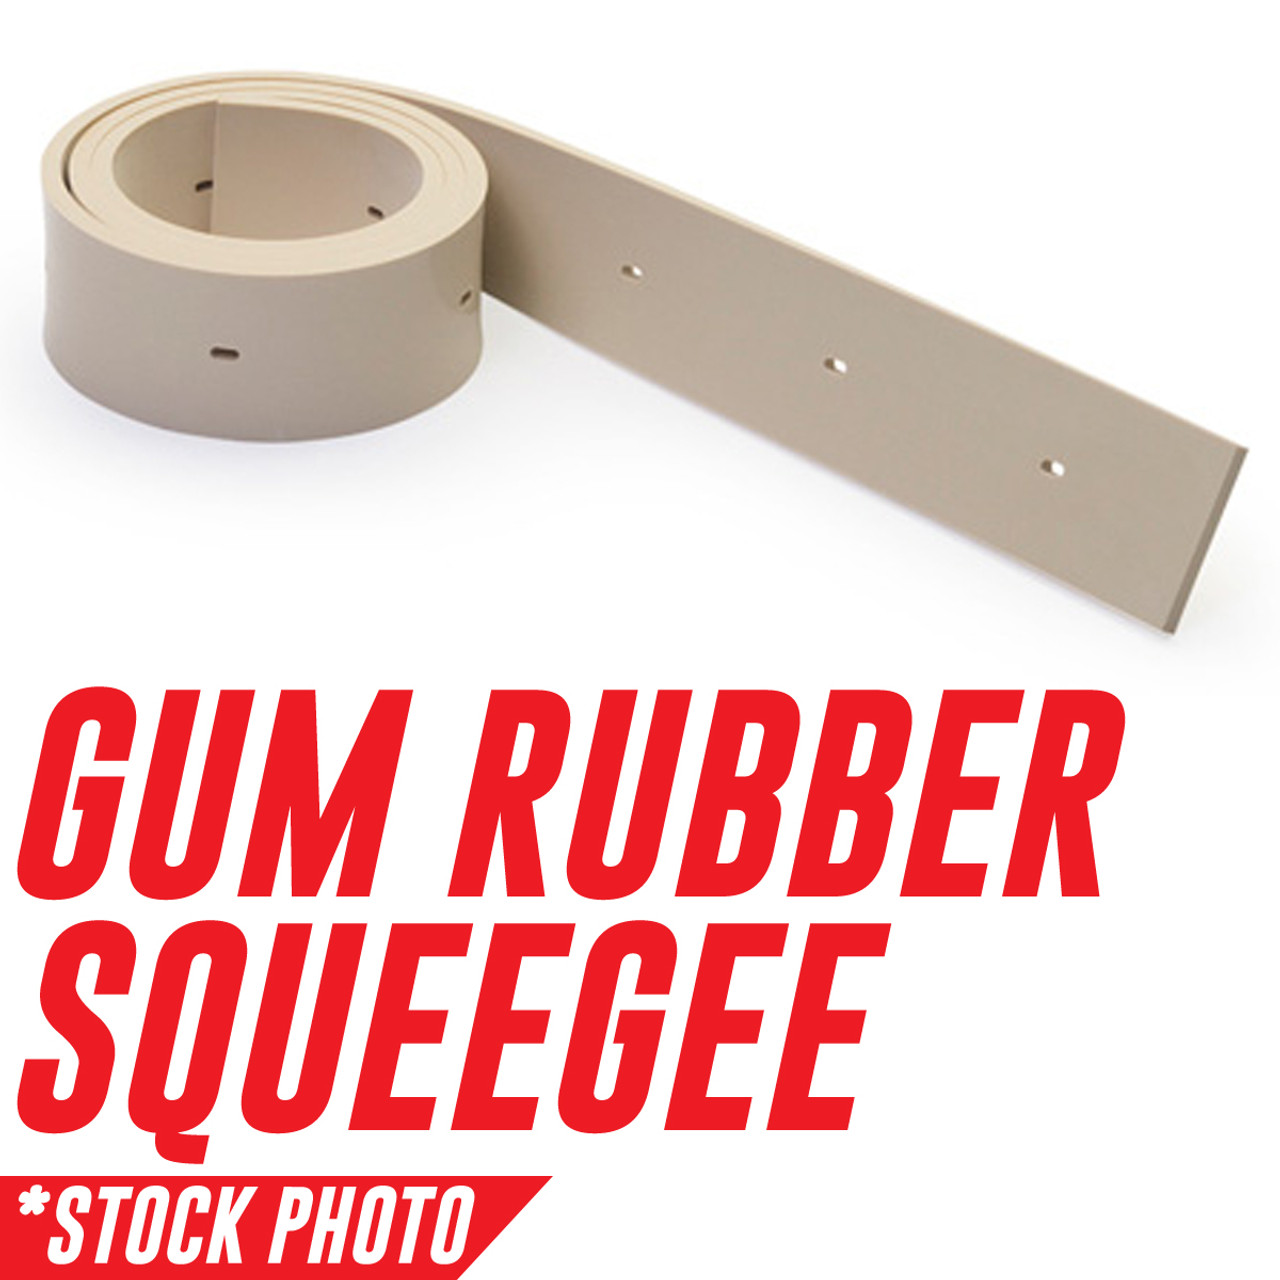 56390791: Squeegee Set, Cylindrical, Tan Gum fits Advance-Nilfisk Models Adgressor 3520, Adgressor 3820, Retriever 3800